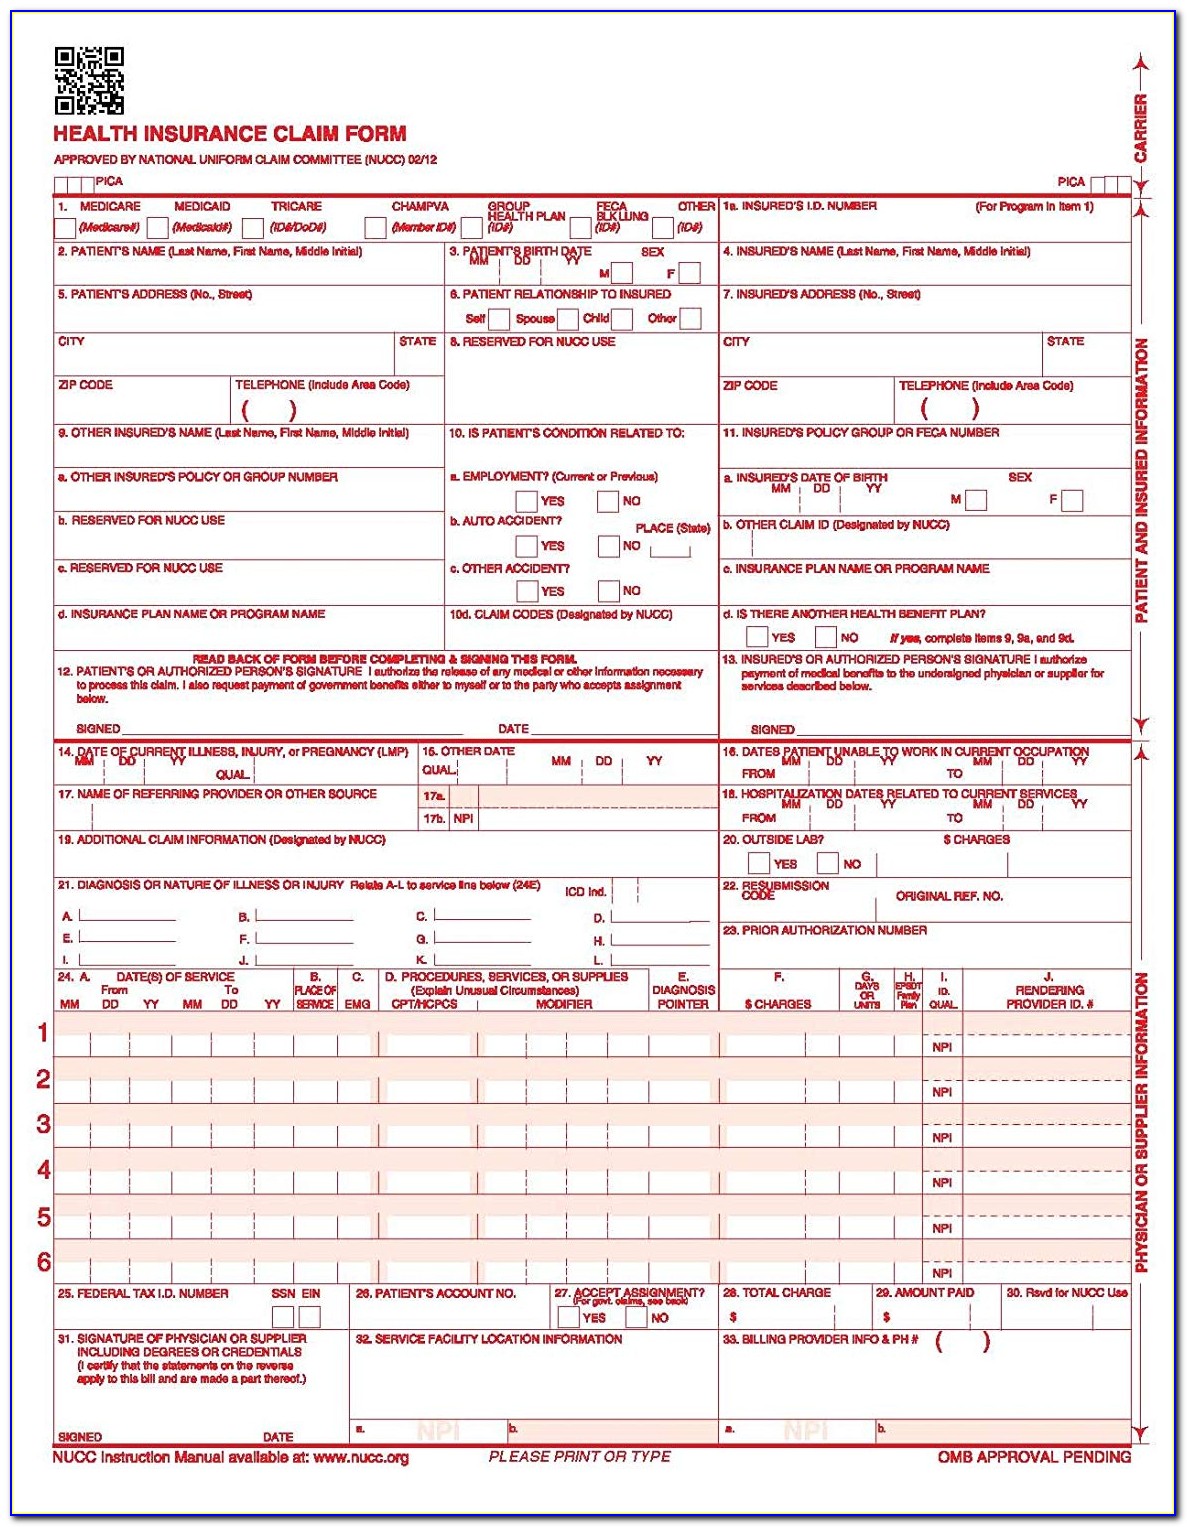 Hcfa 1500 Form Instructions 2017